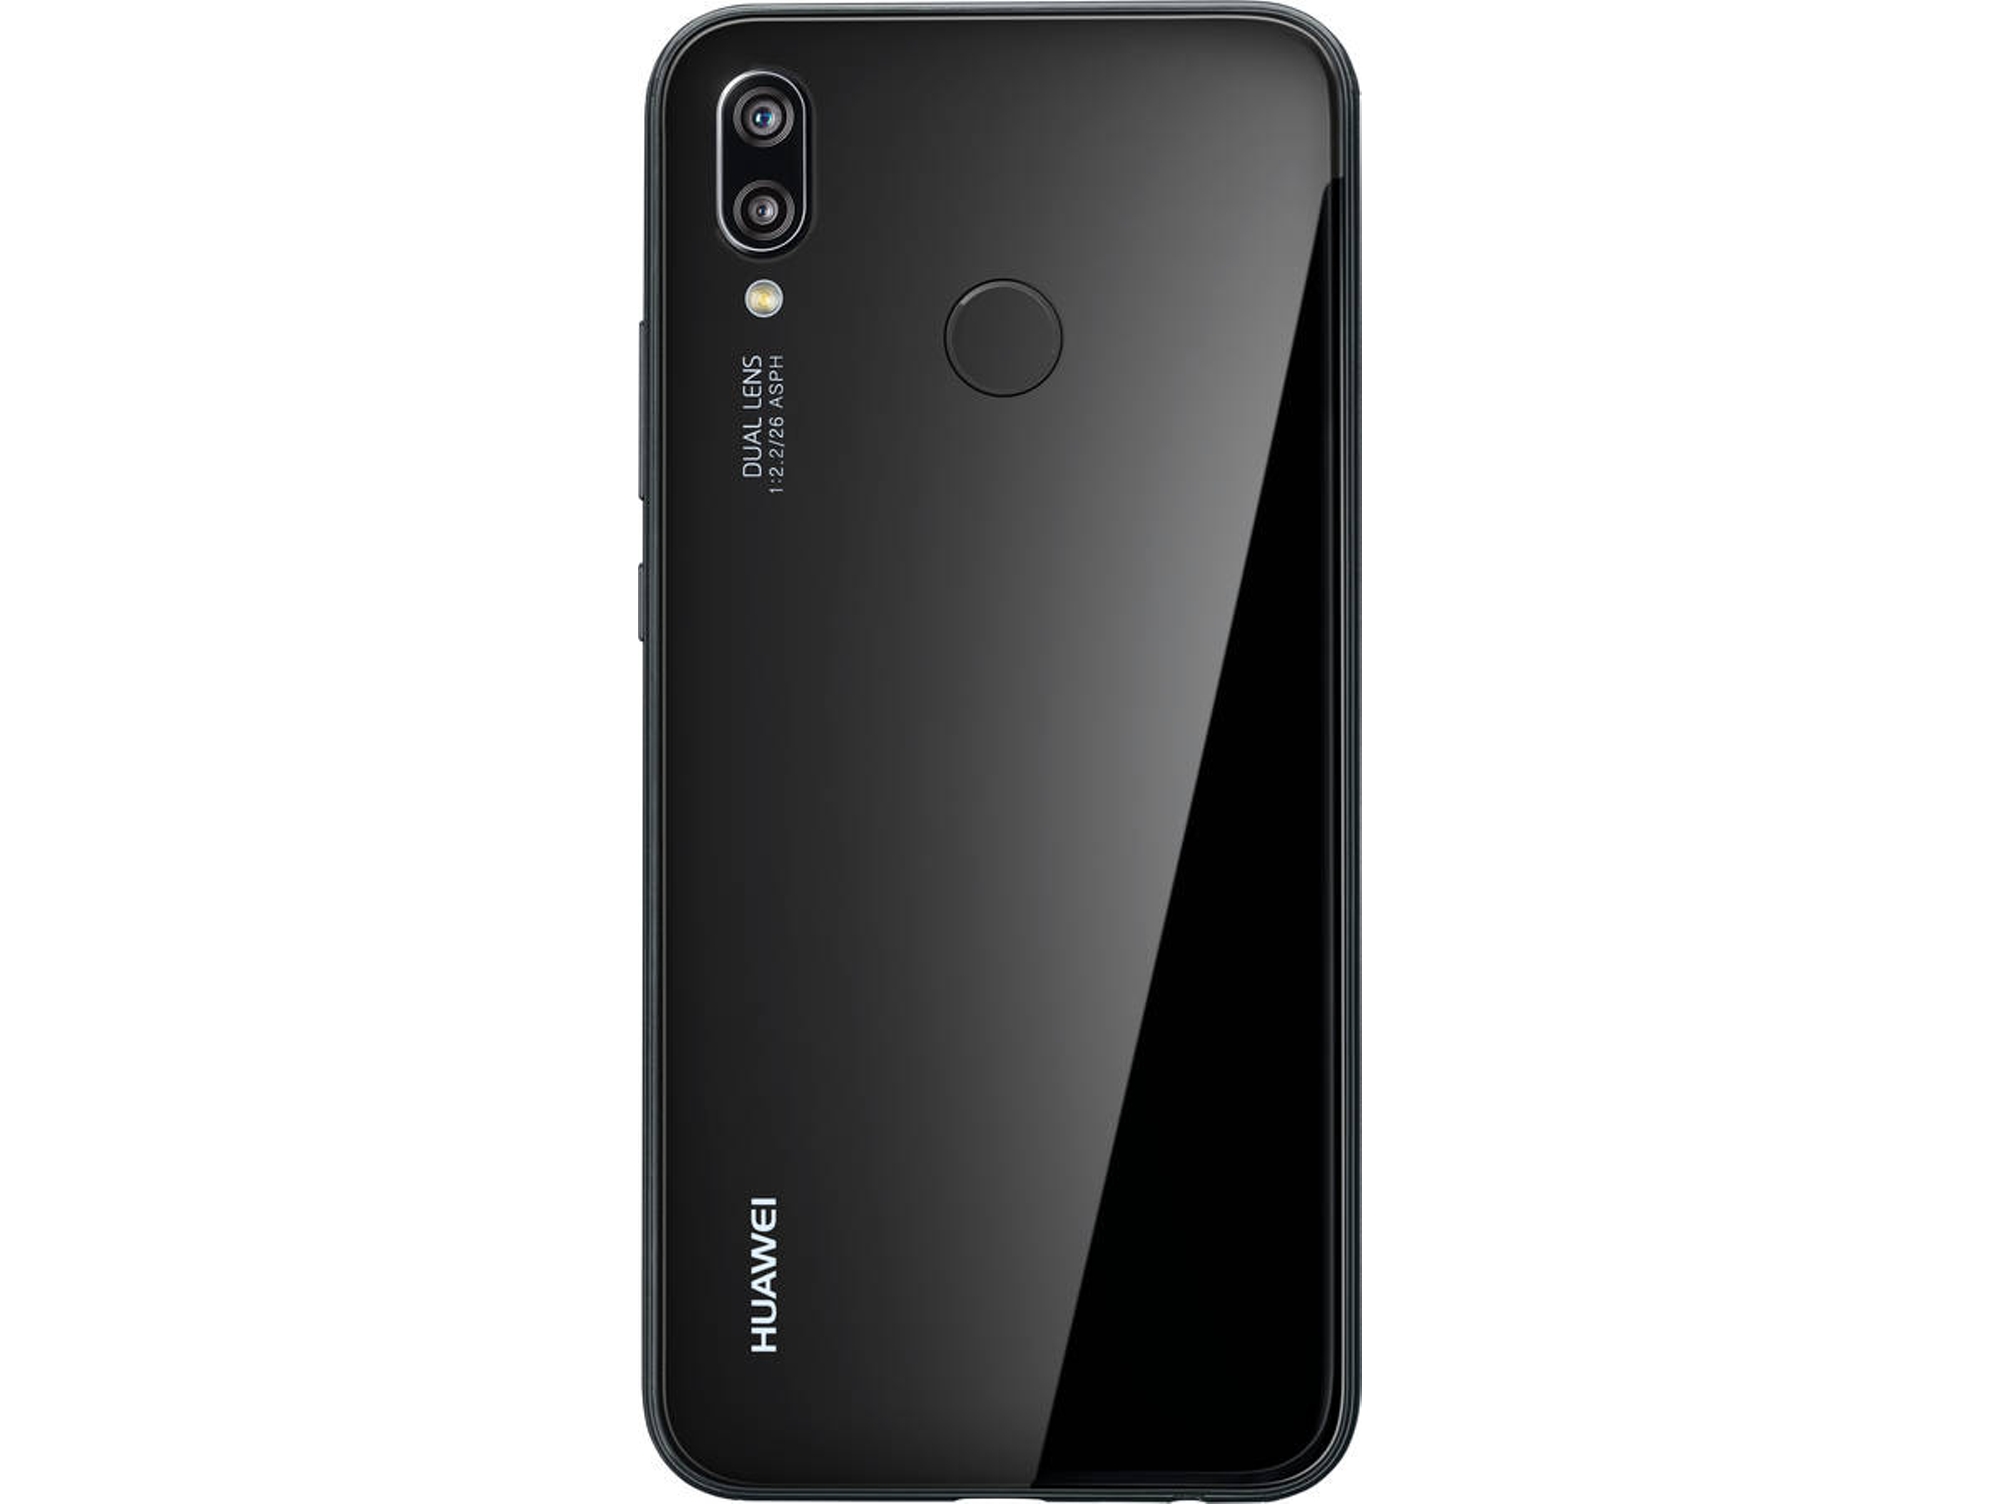 Smartphone 4G/LTE Huawei P20 Lite de 64 GB con tarjeta SIM única